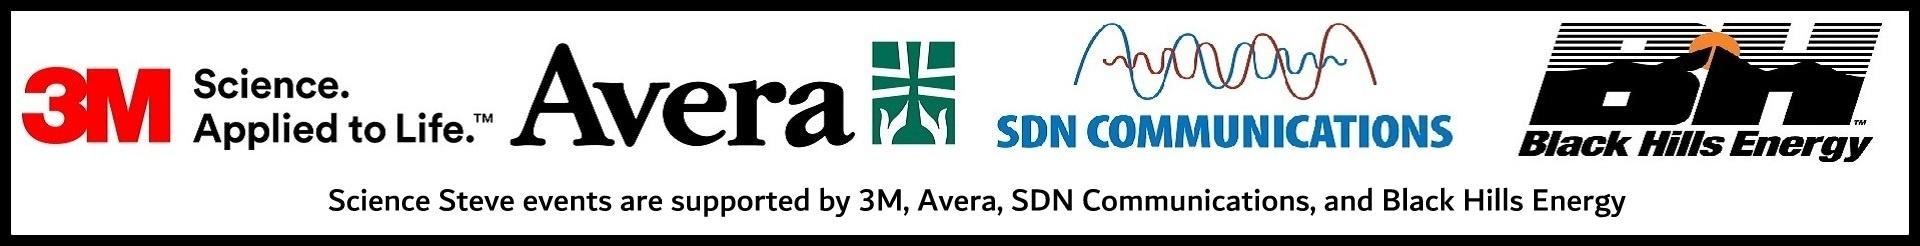 SDPB Science Steve sponsors, including 3M. Avera Health, SDN Communications, and Black Hills Energy. 